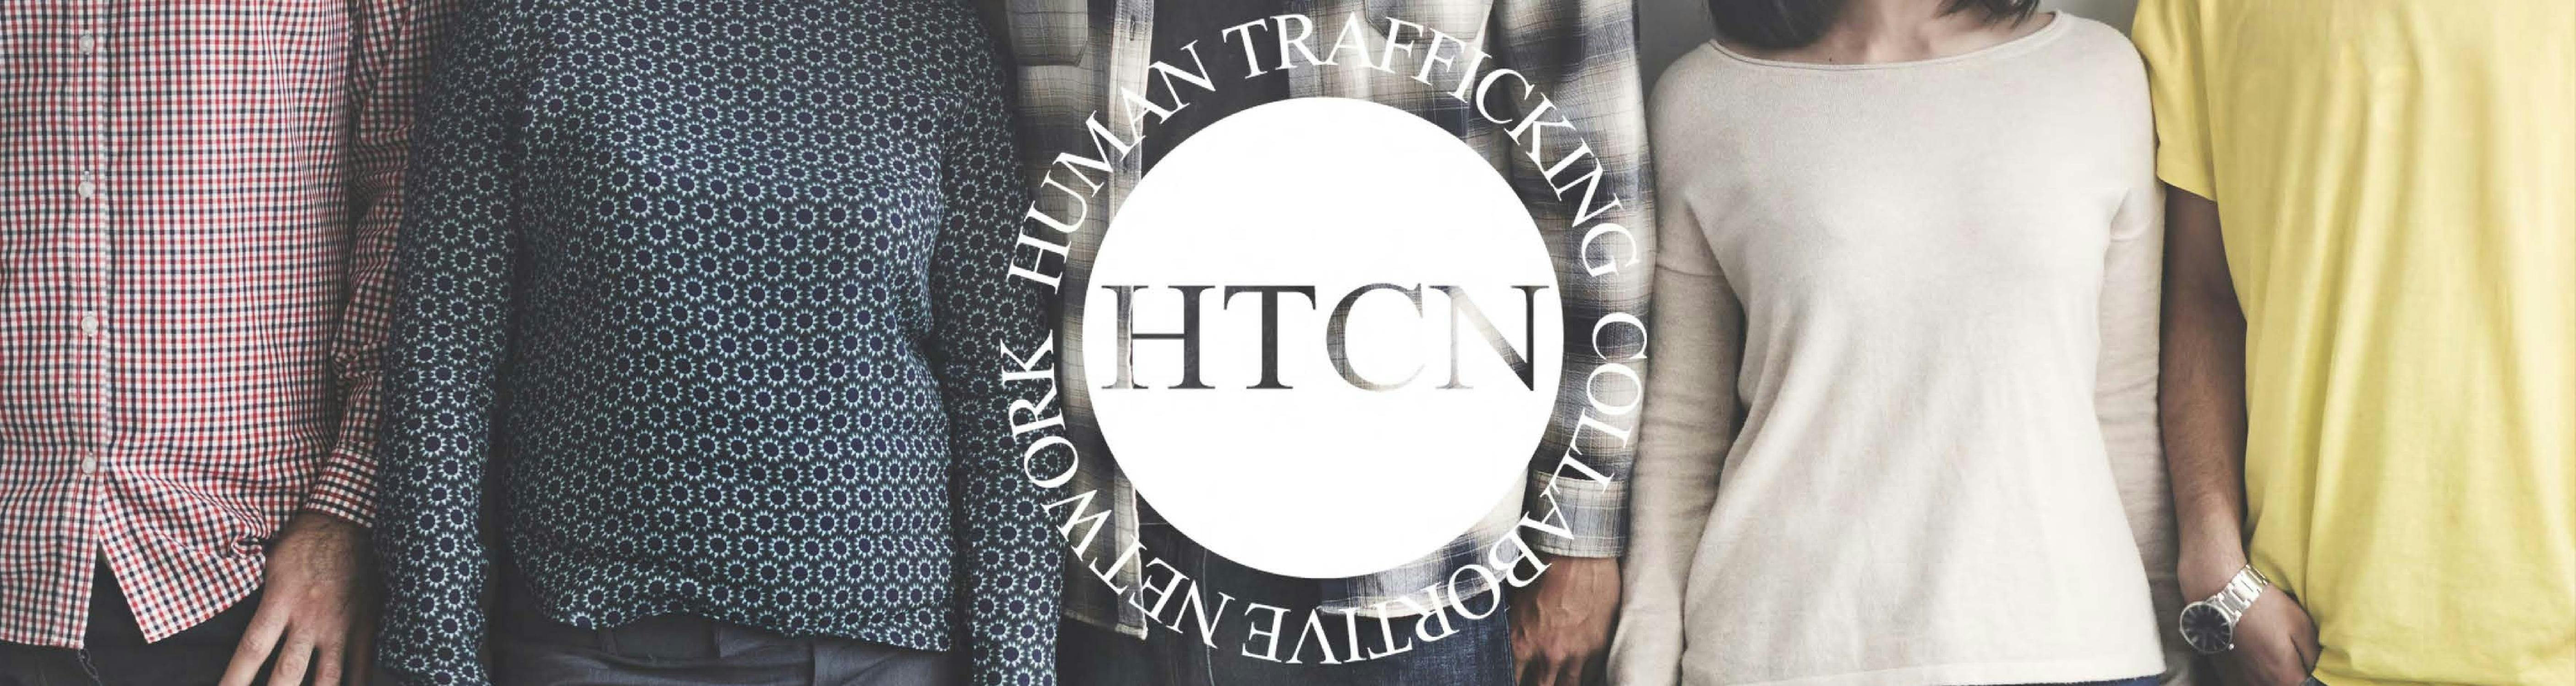 HTCN Board Formation Meeting 